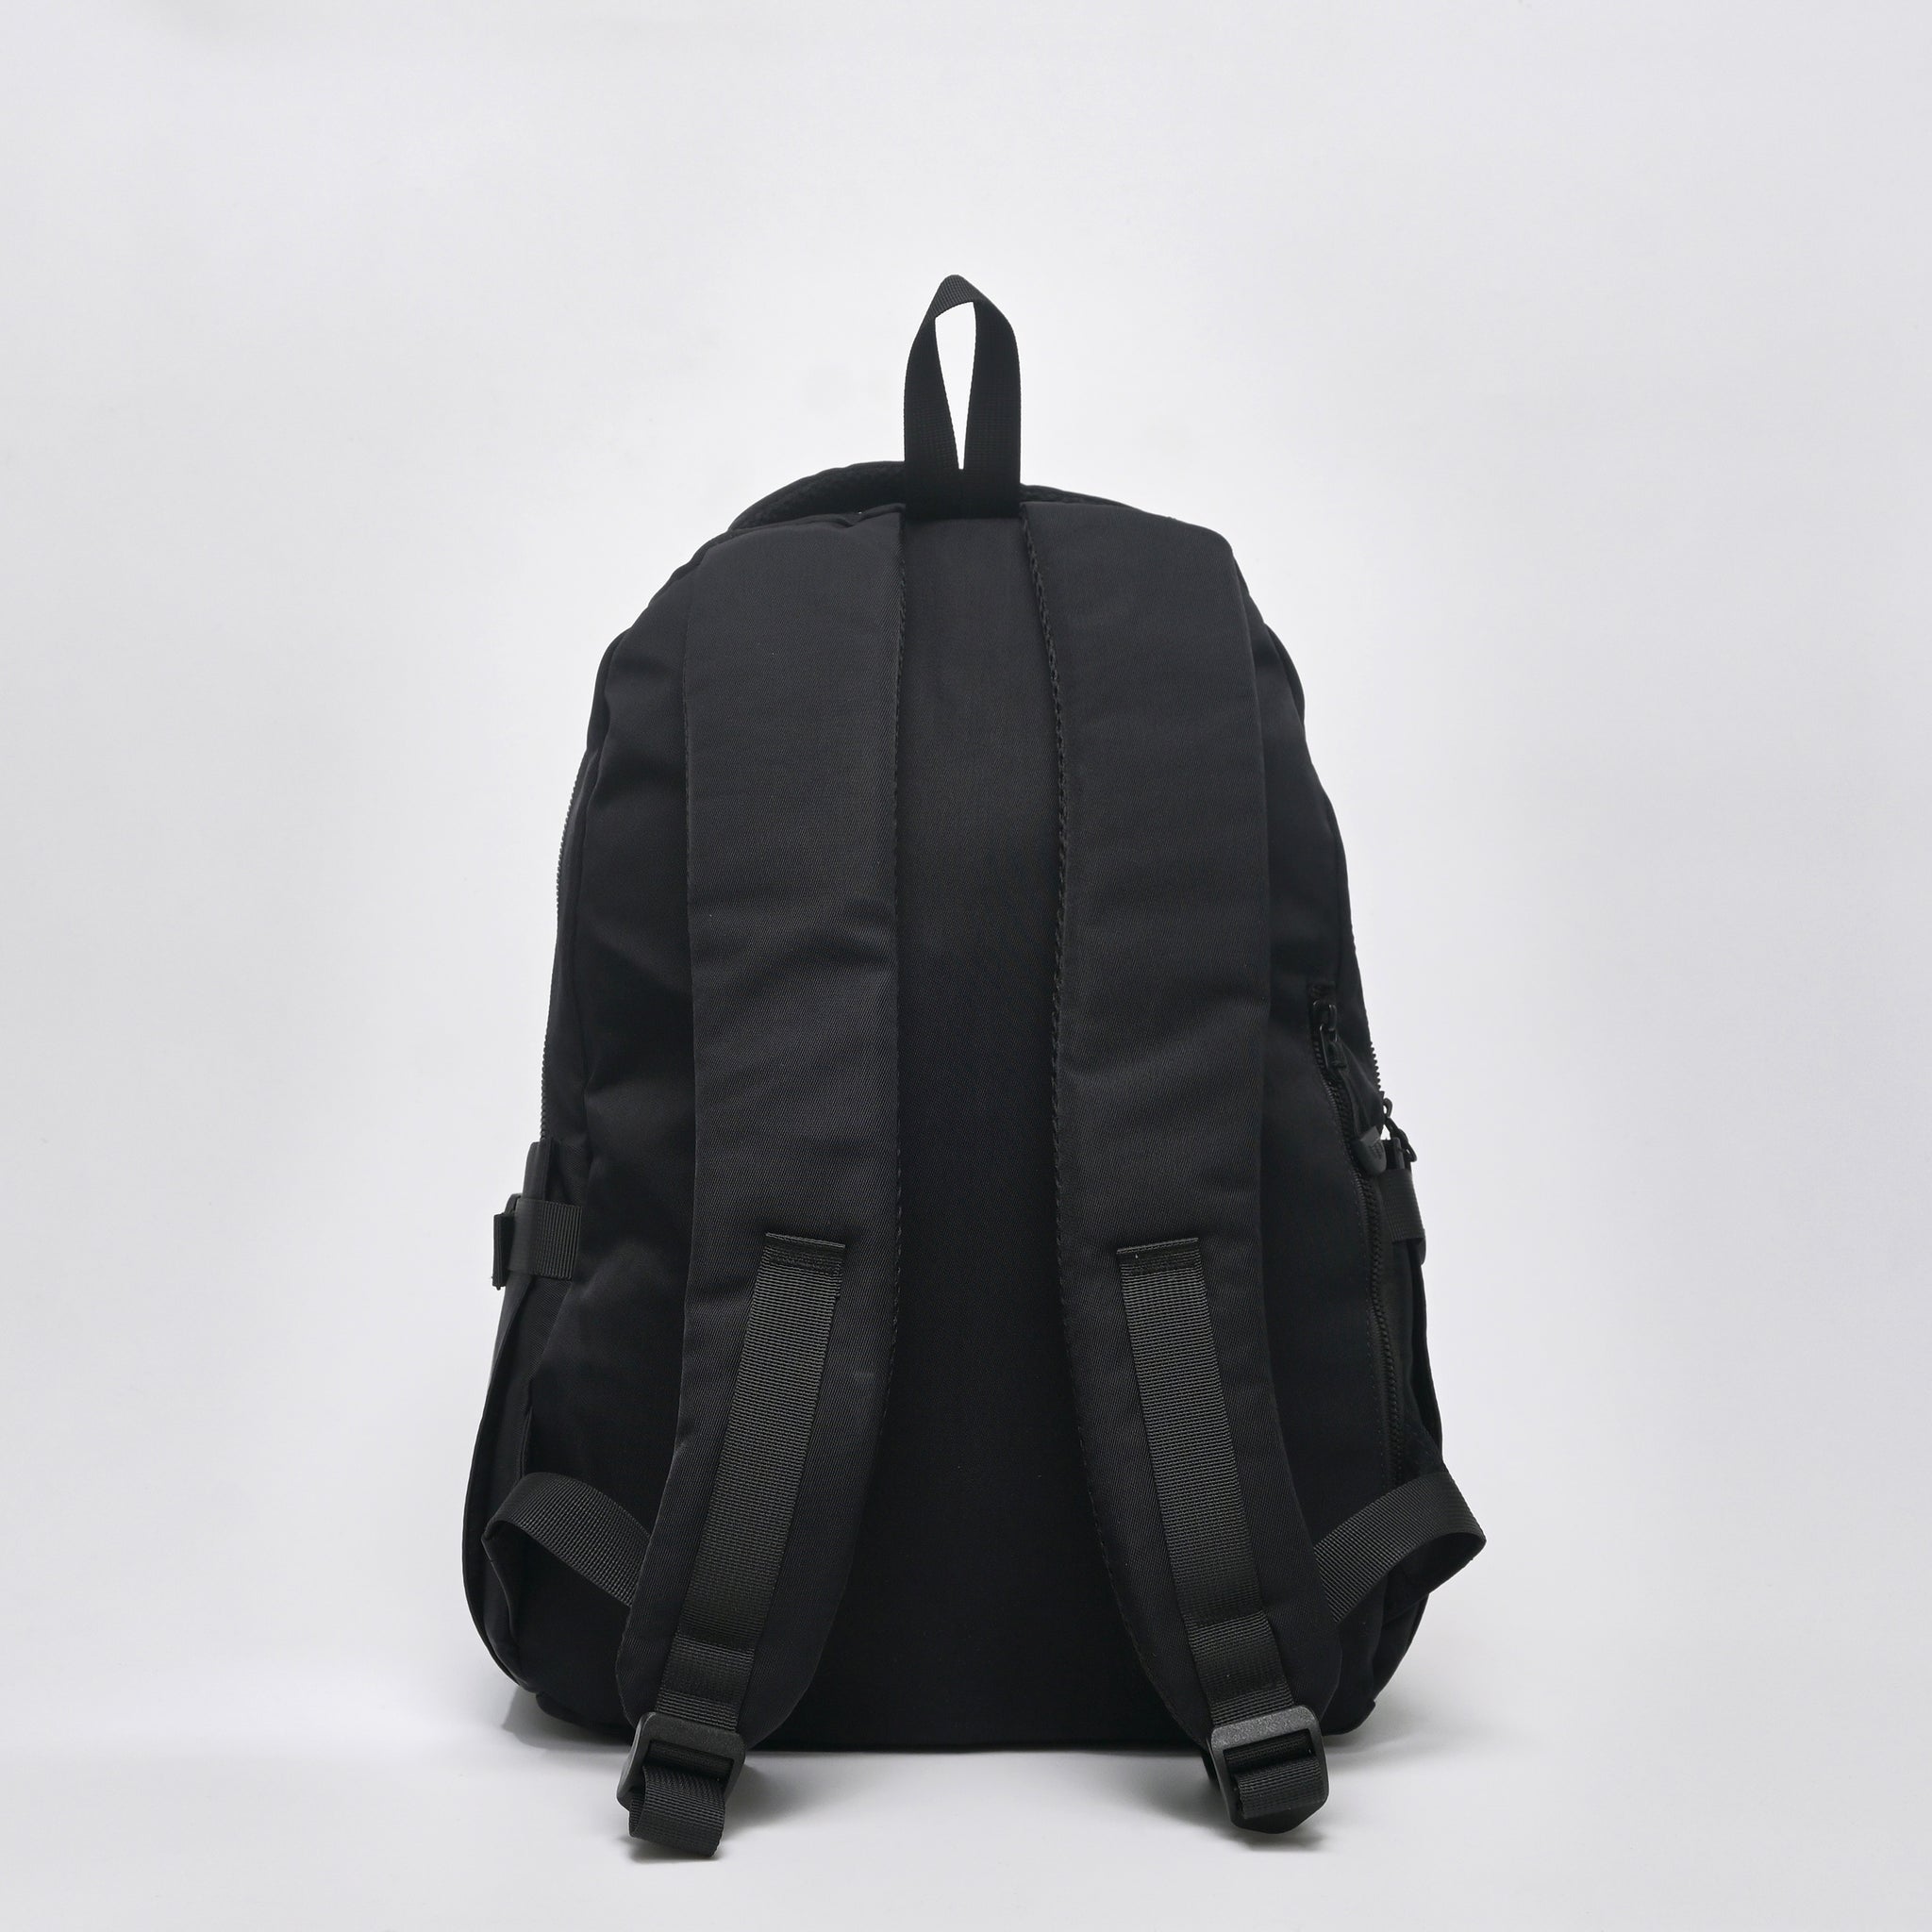 Casual laptop backpack with zipper pockets - TGBP1533NN3BK3